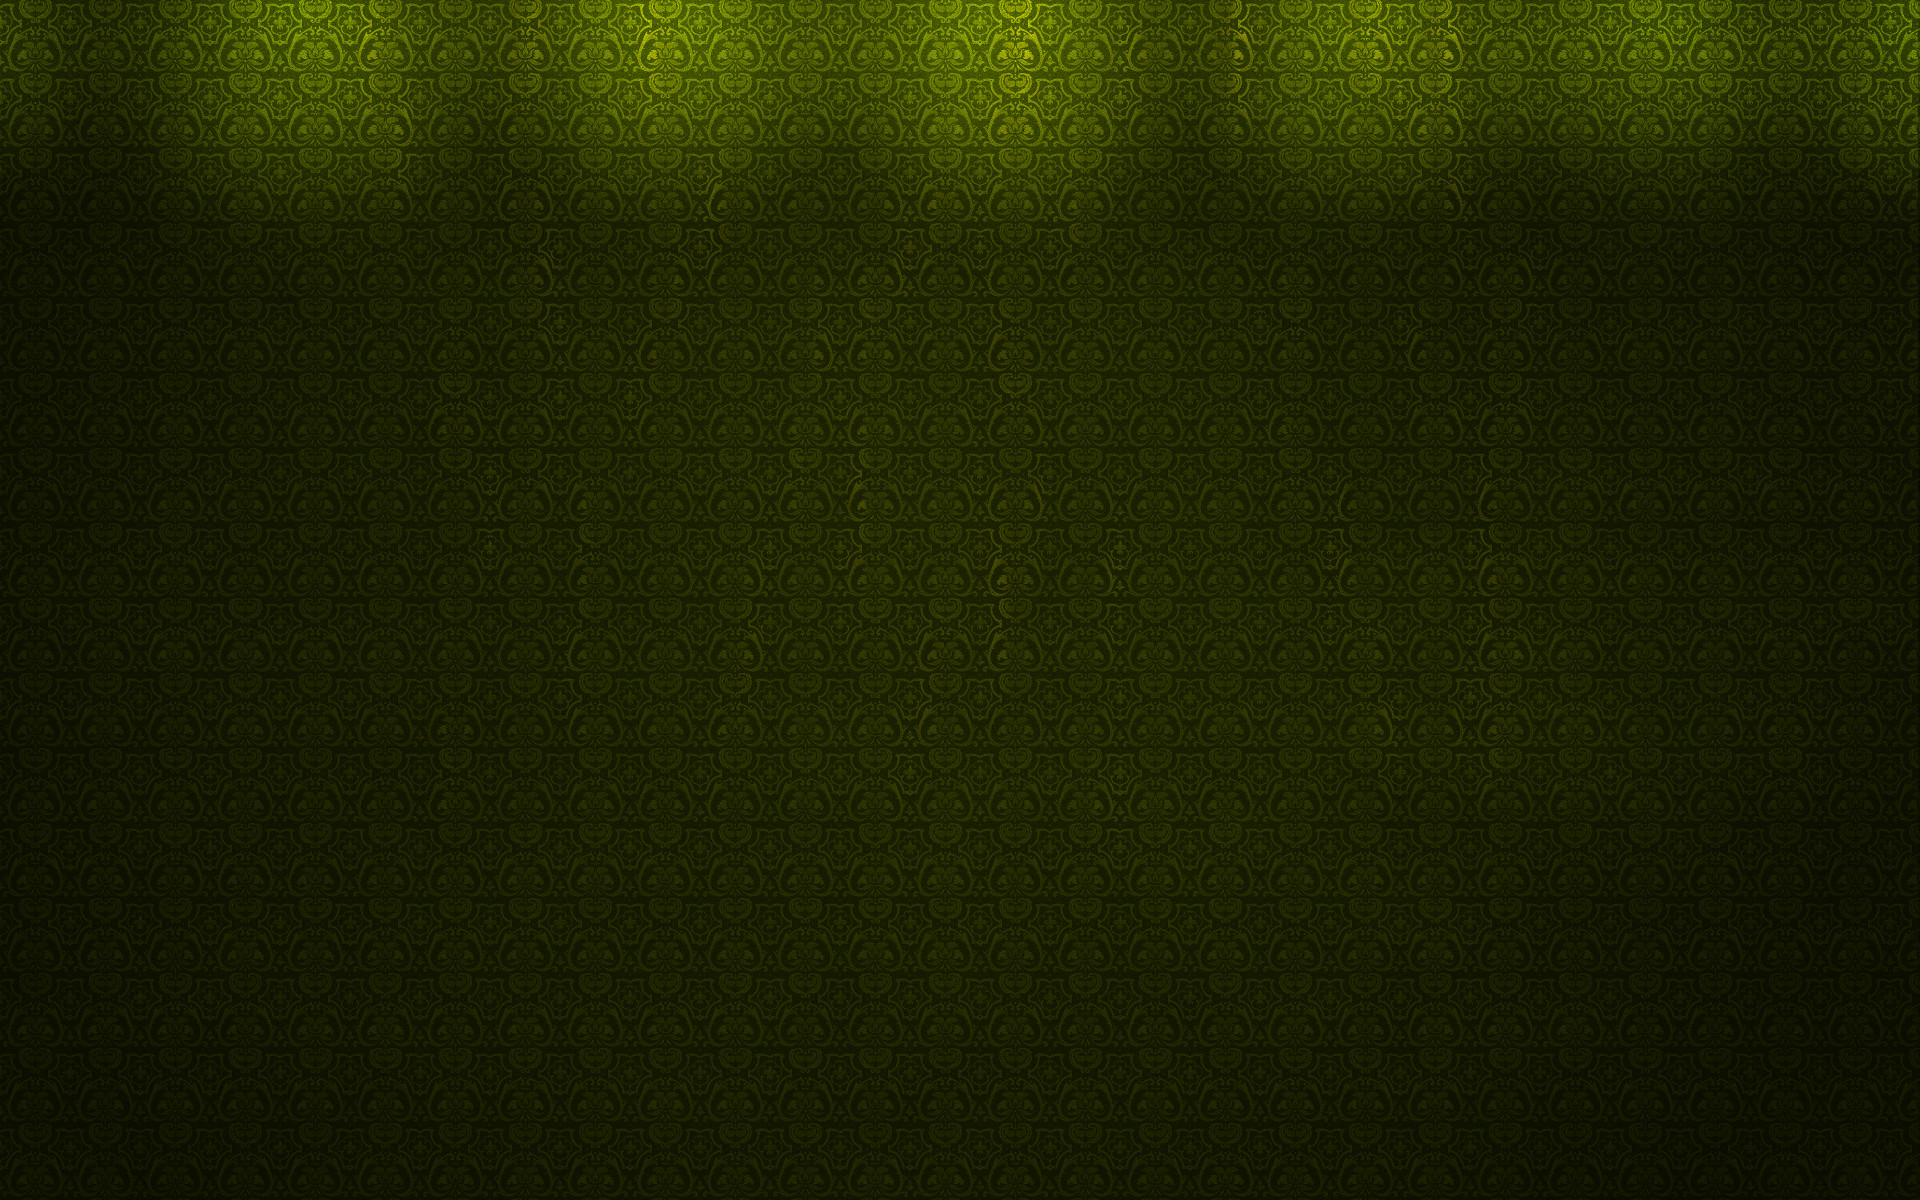 1920x1200 Green And Black Wallpapers 4 Widescreen Wallpaper